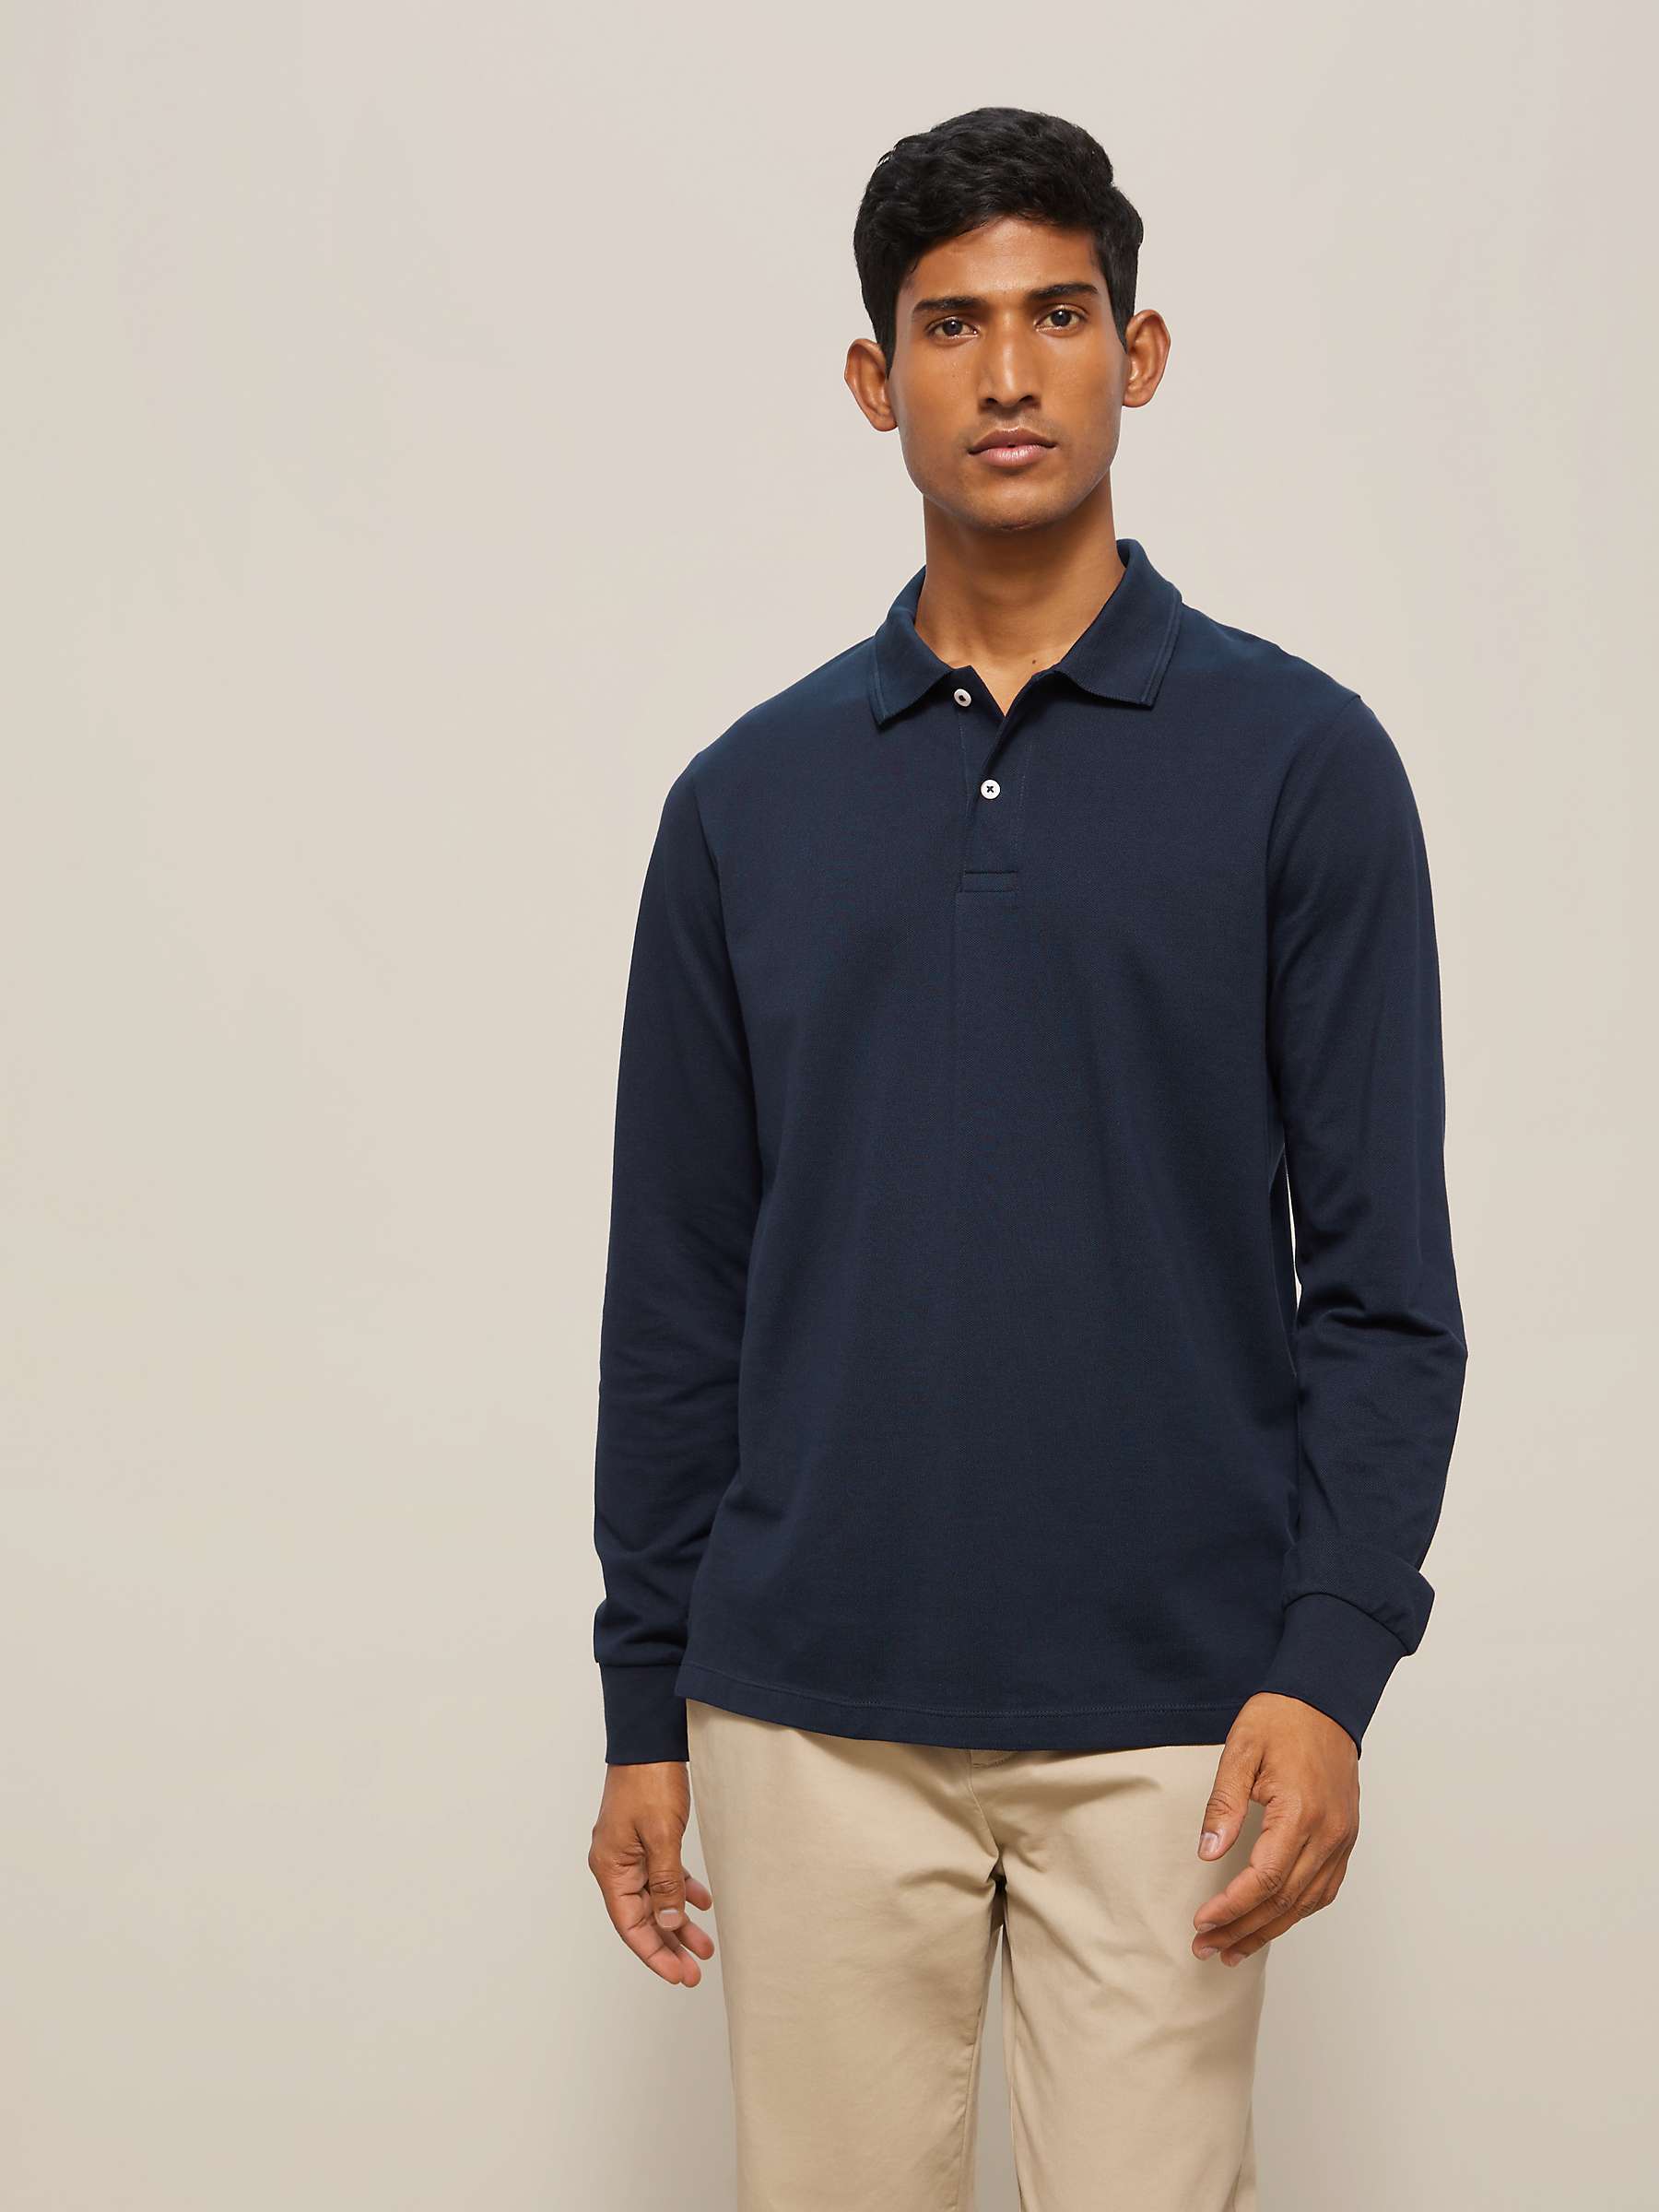 Buy John Lewis Supima Cotton Long Sleeve Jersey Polo Shirt Online at johnlewis.com